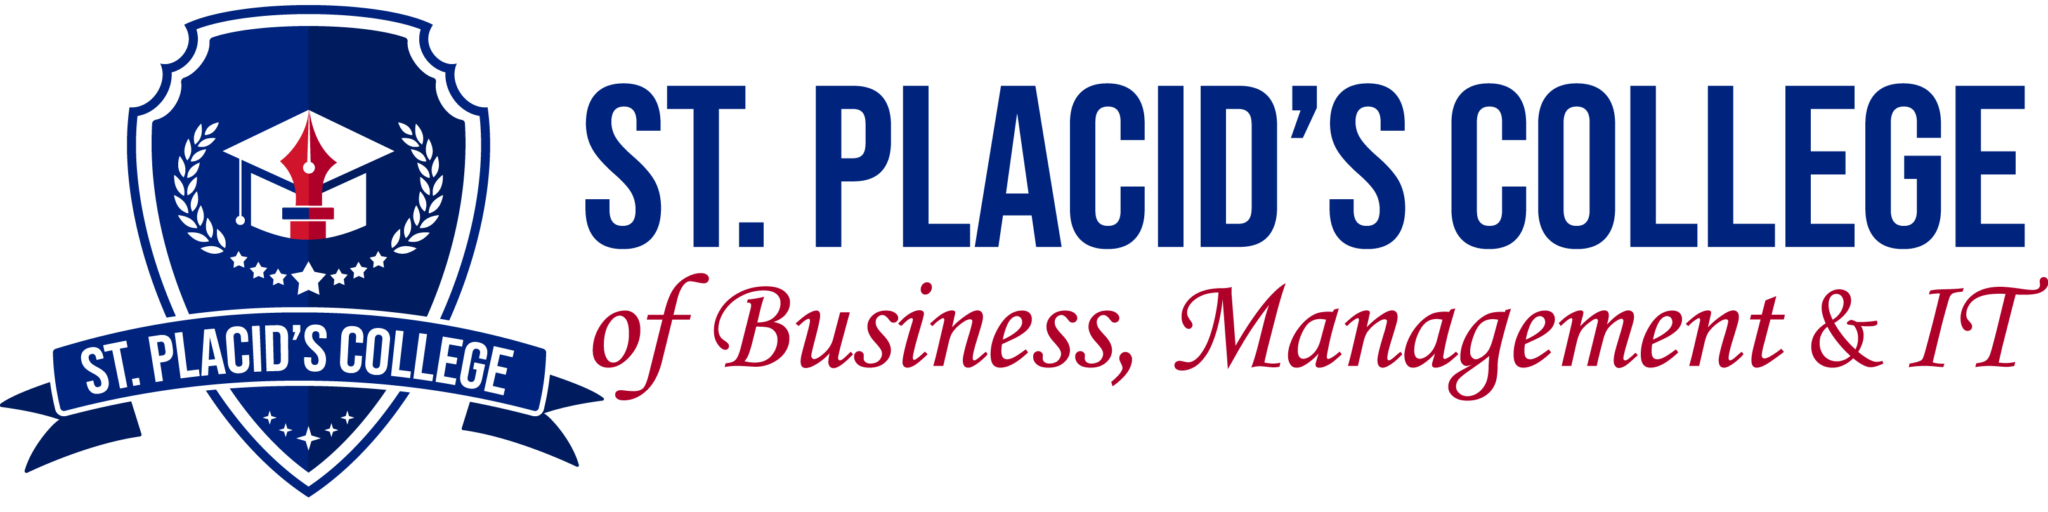 St.placid's College Of Business, Management & It logo